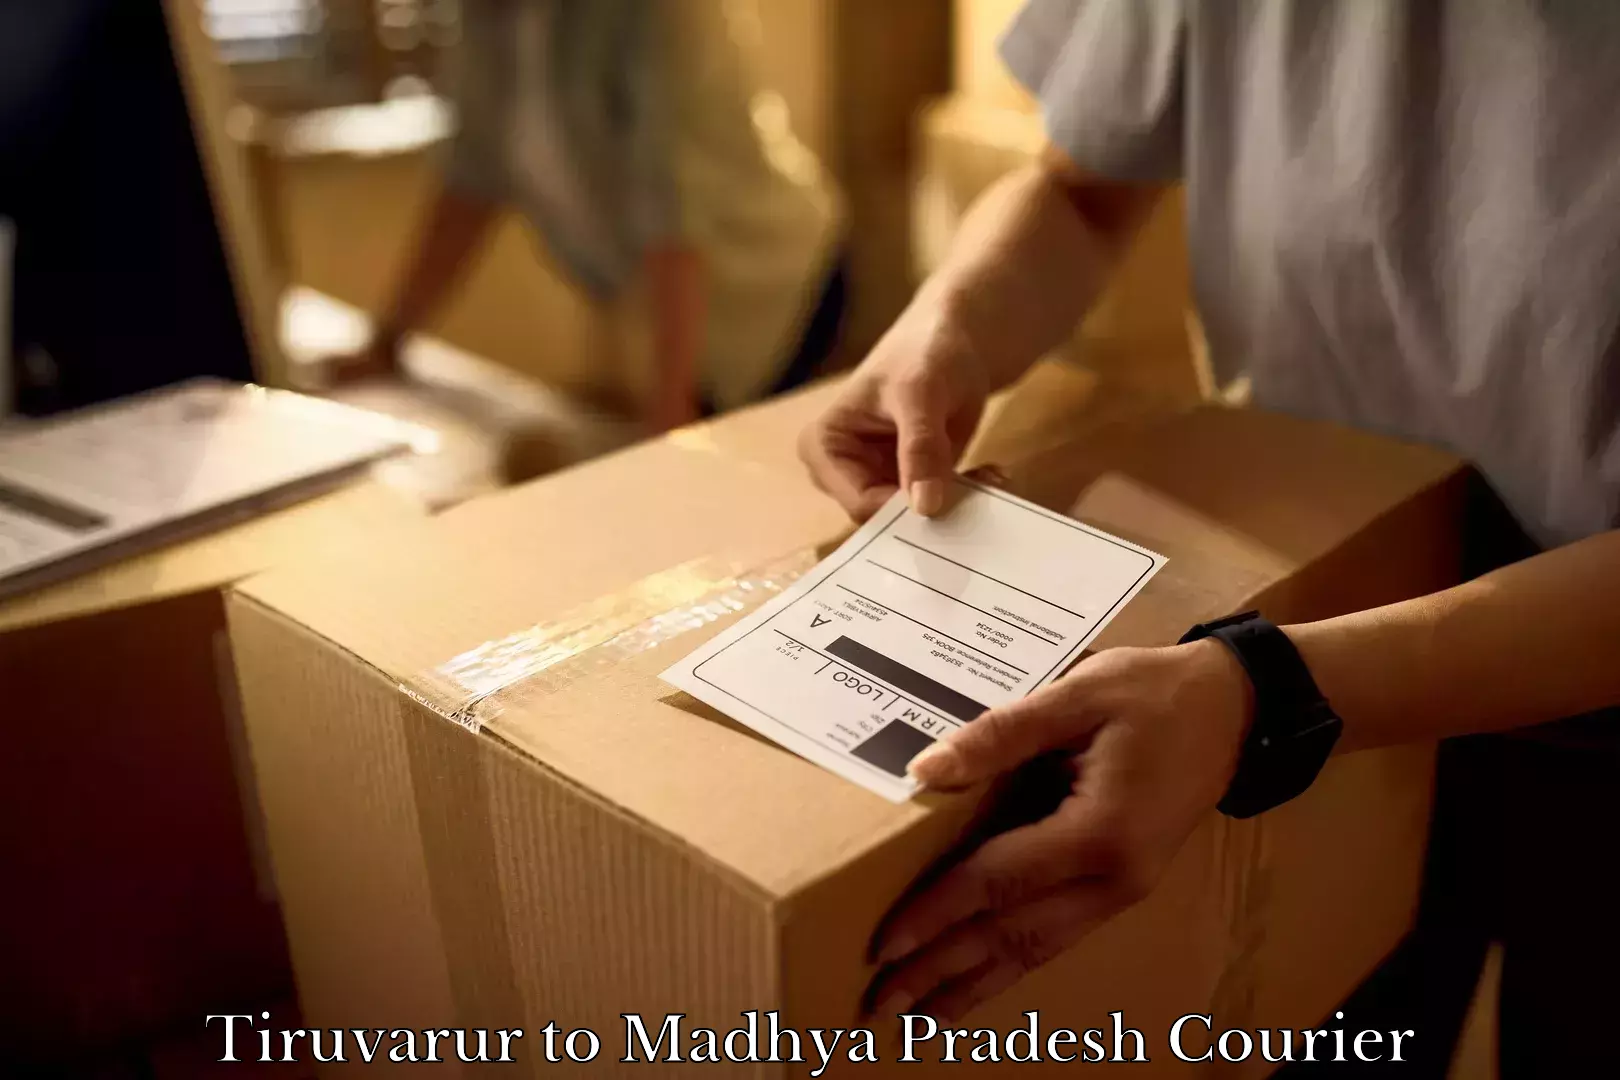 Furniture delivery service Tiruvarur to Khurai